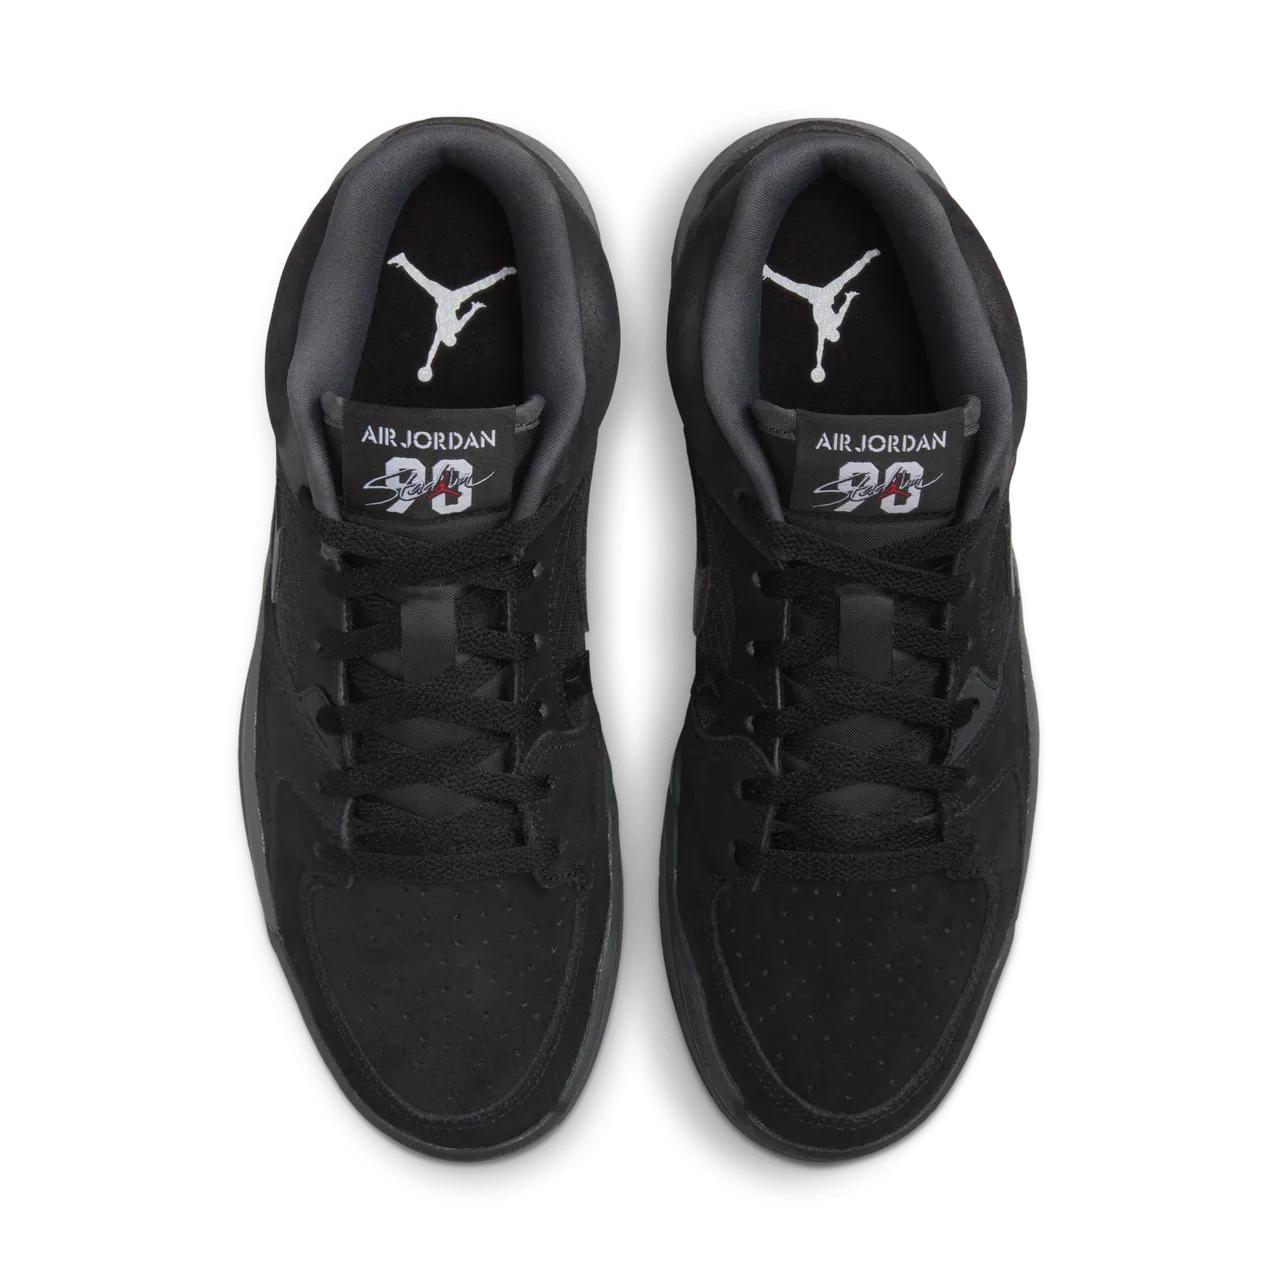 Jordan Stadium 90 Men's Shoes - Black - Leather